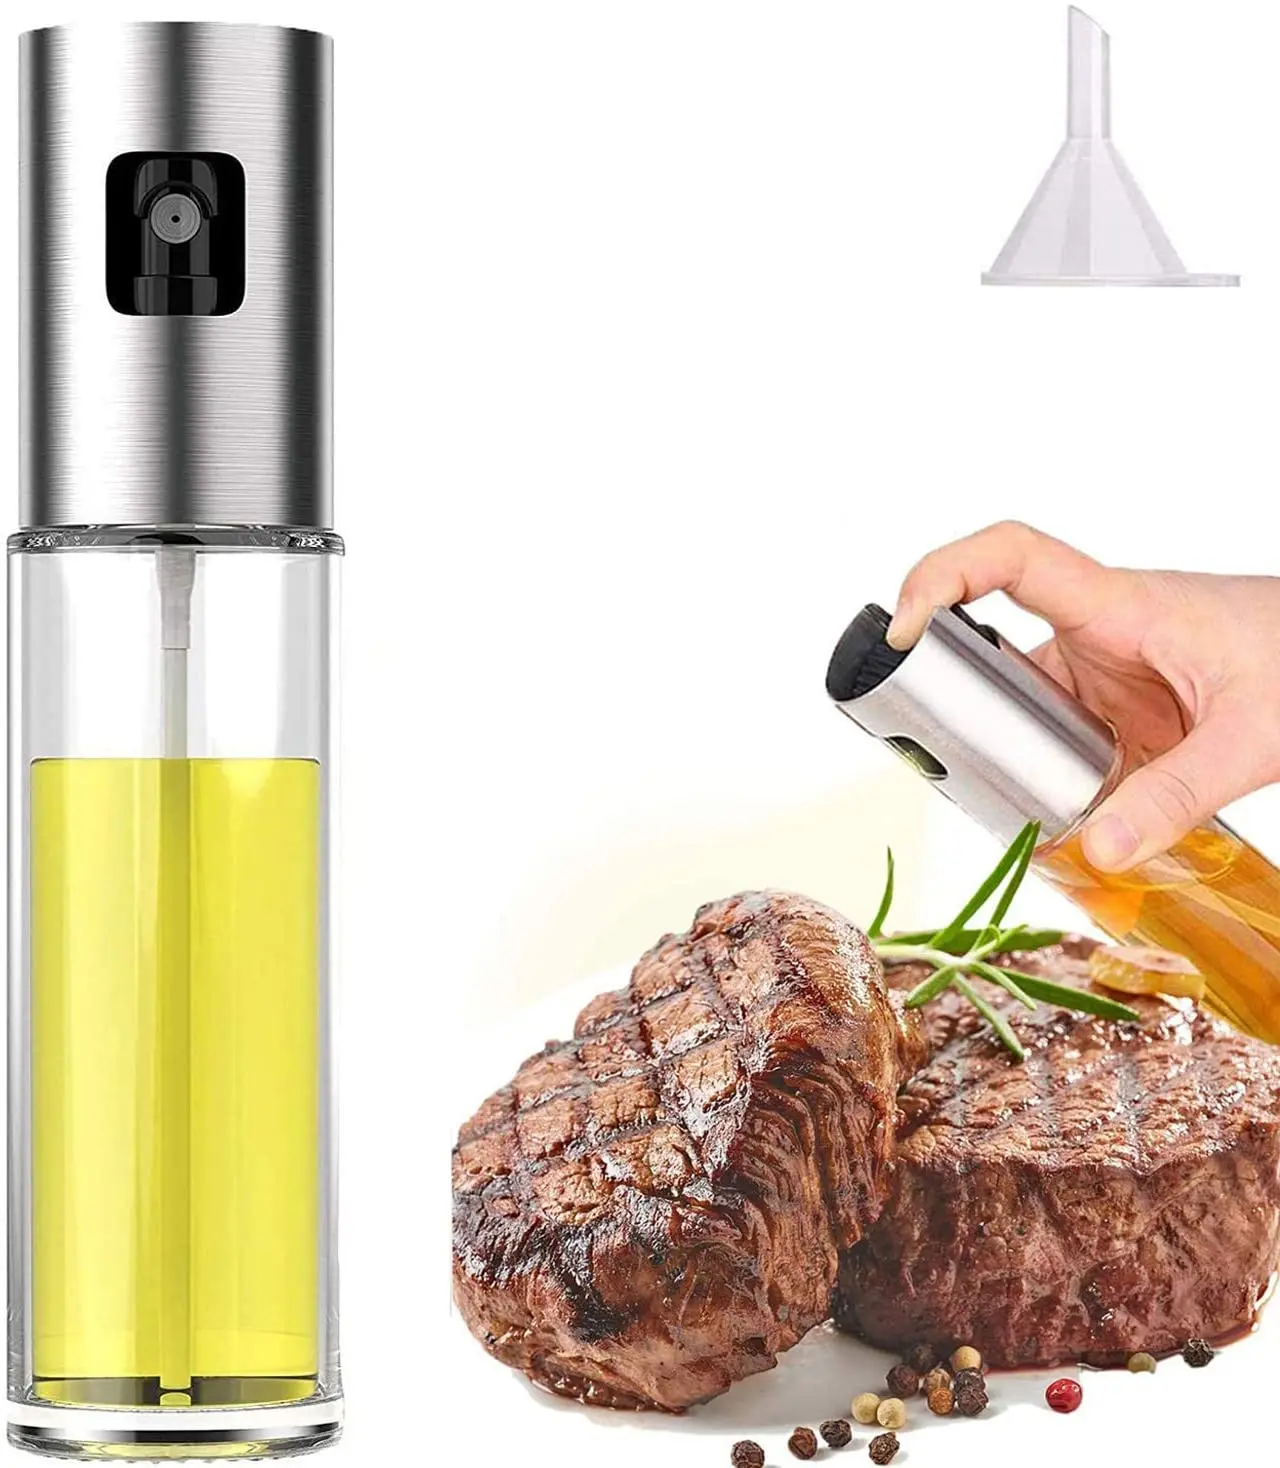 

Kitchen tools cooking vinegar sauce refillalbe 200ml 300ml olive oil plastic spray bottle with sprayer dispenser for salad BBQ